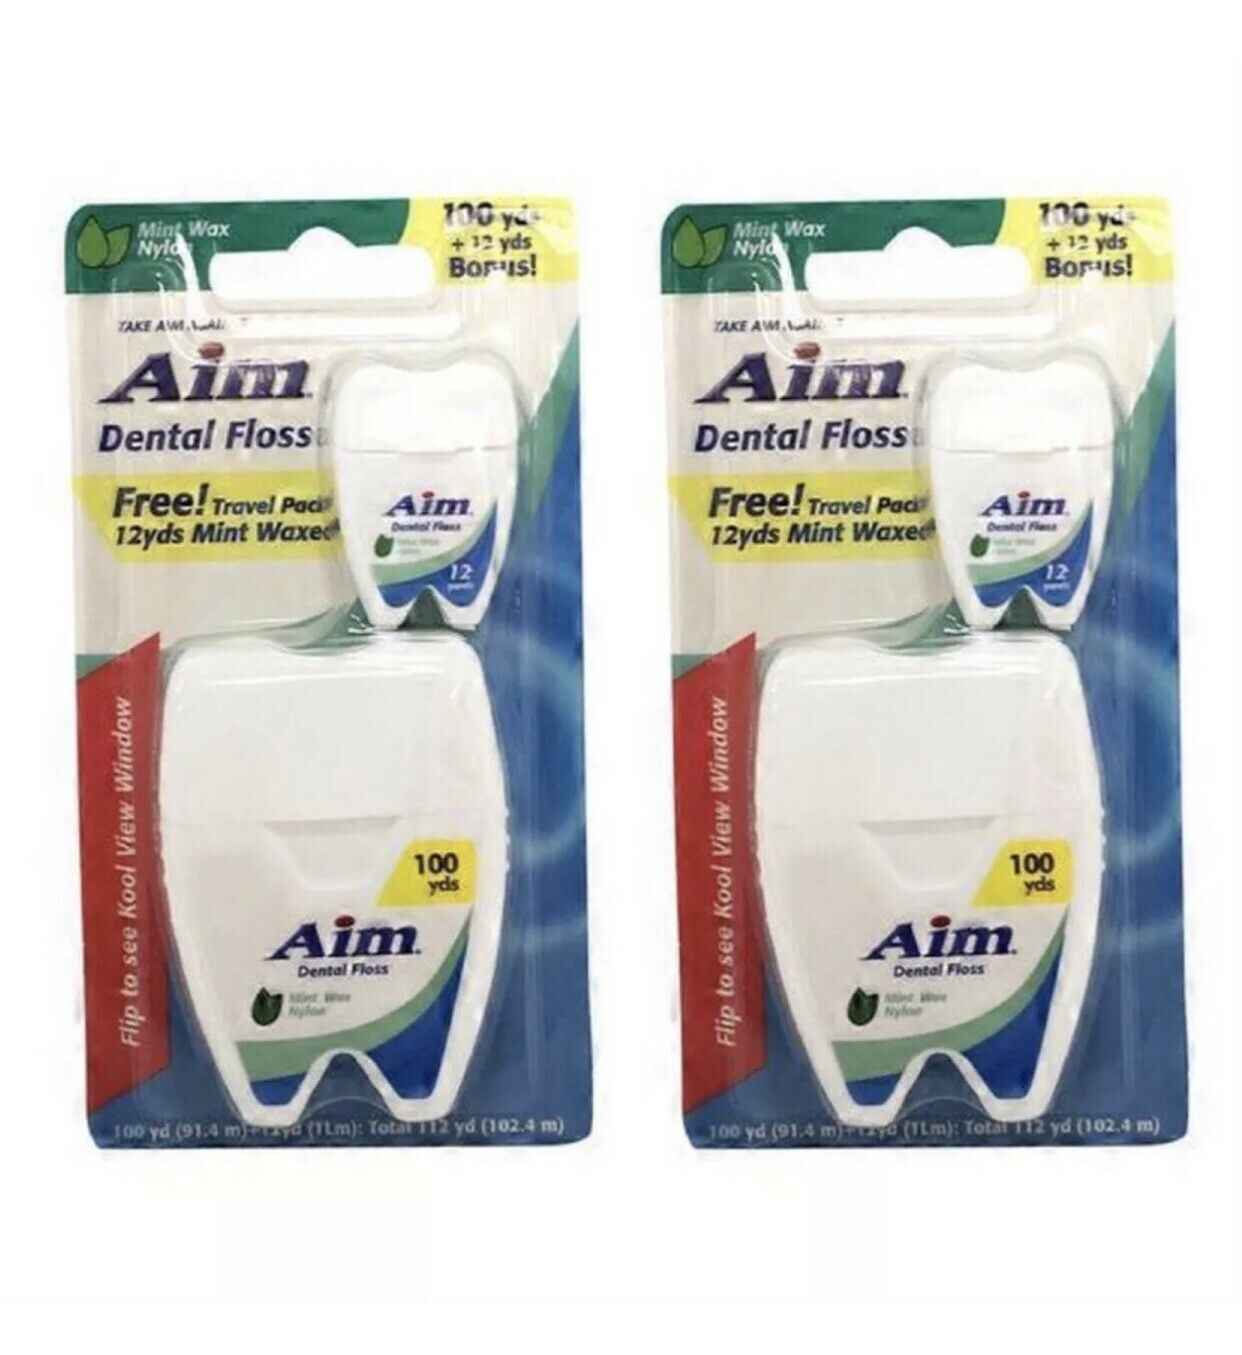 Aim Non-shred Mint Waxed Dental Floss 100 Yards Nylon+ 12 Yard Travel Pack